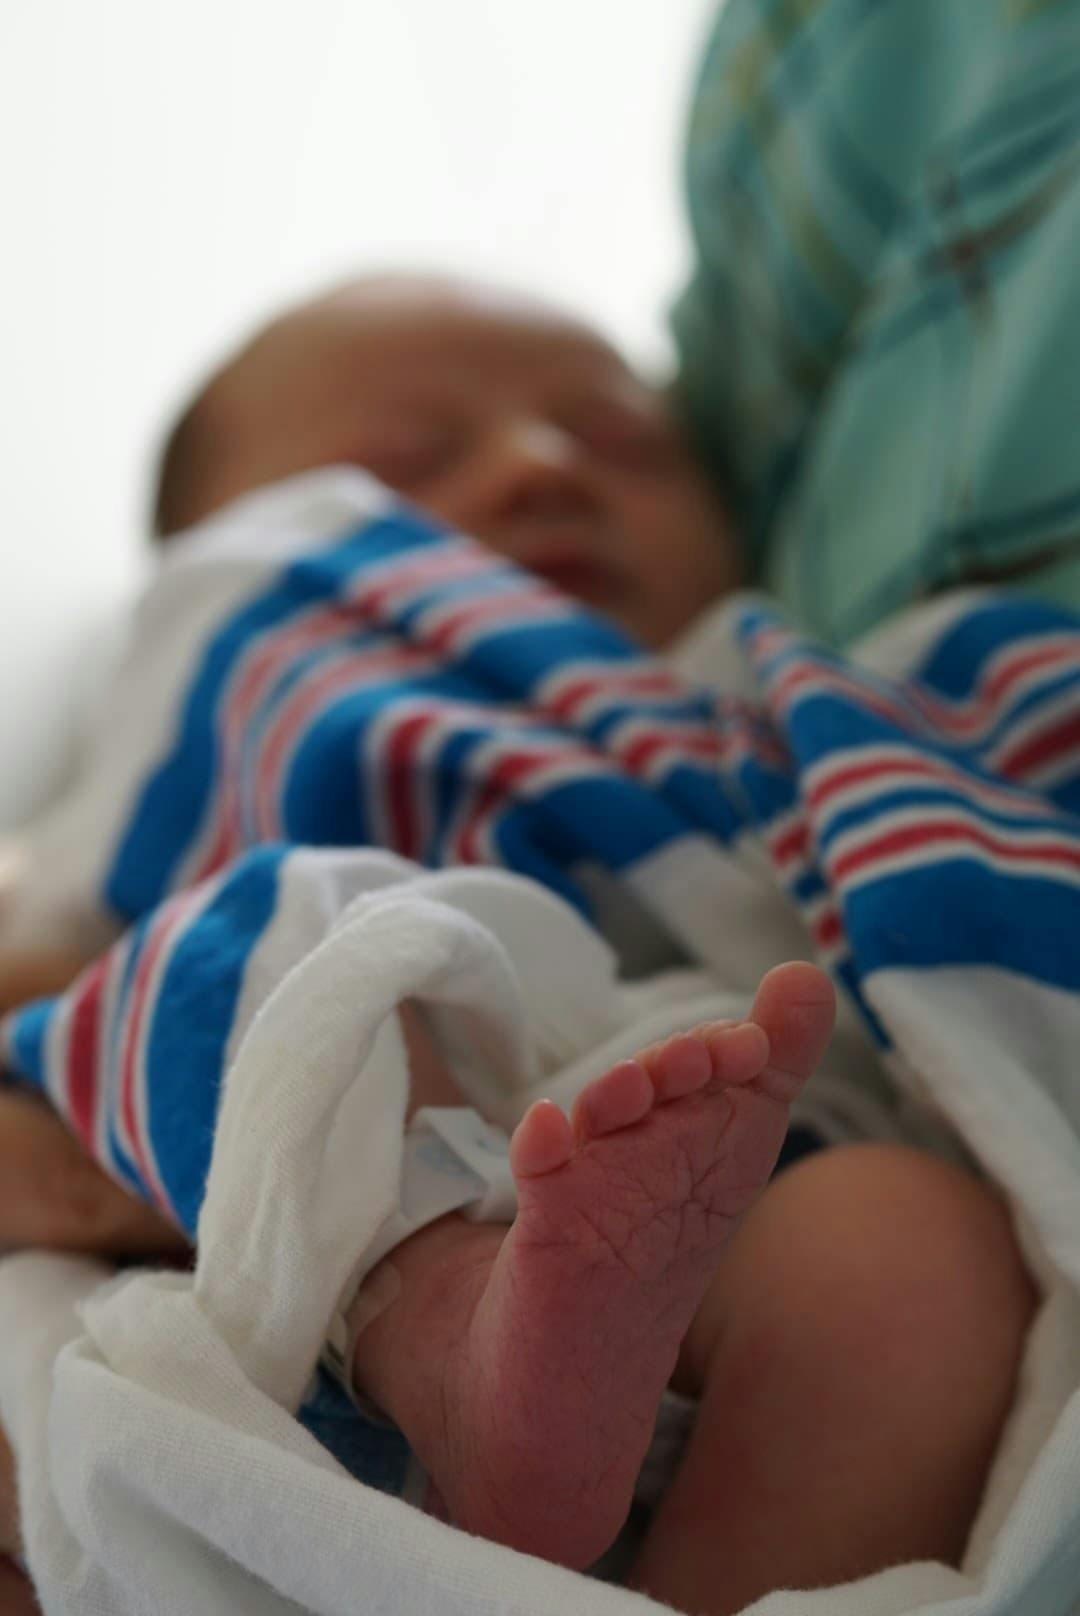 A photo of a newborn's foot